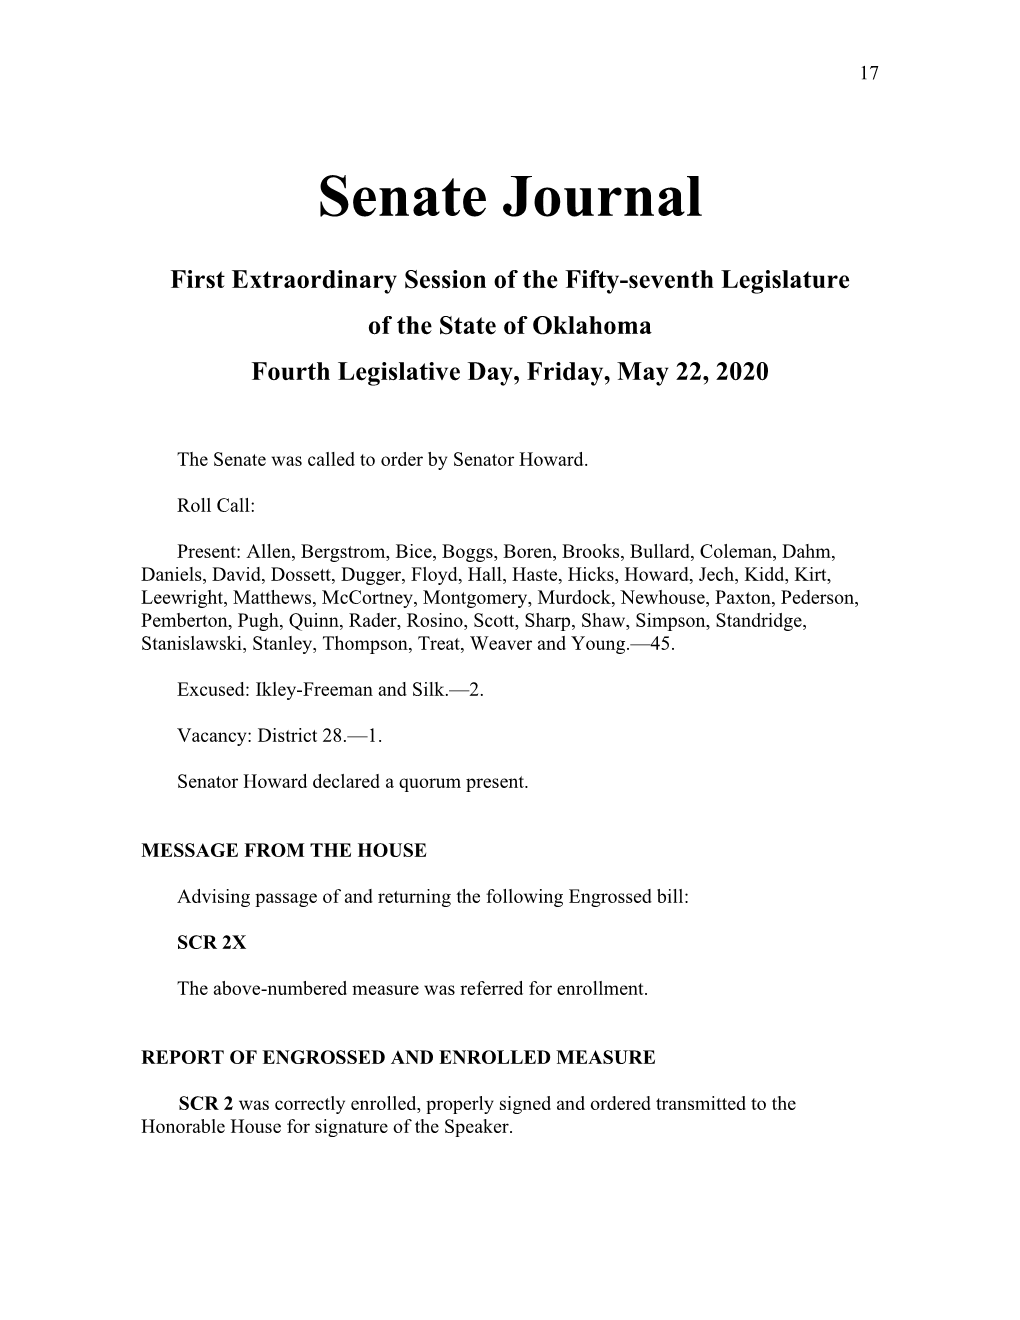 Senate Journal